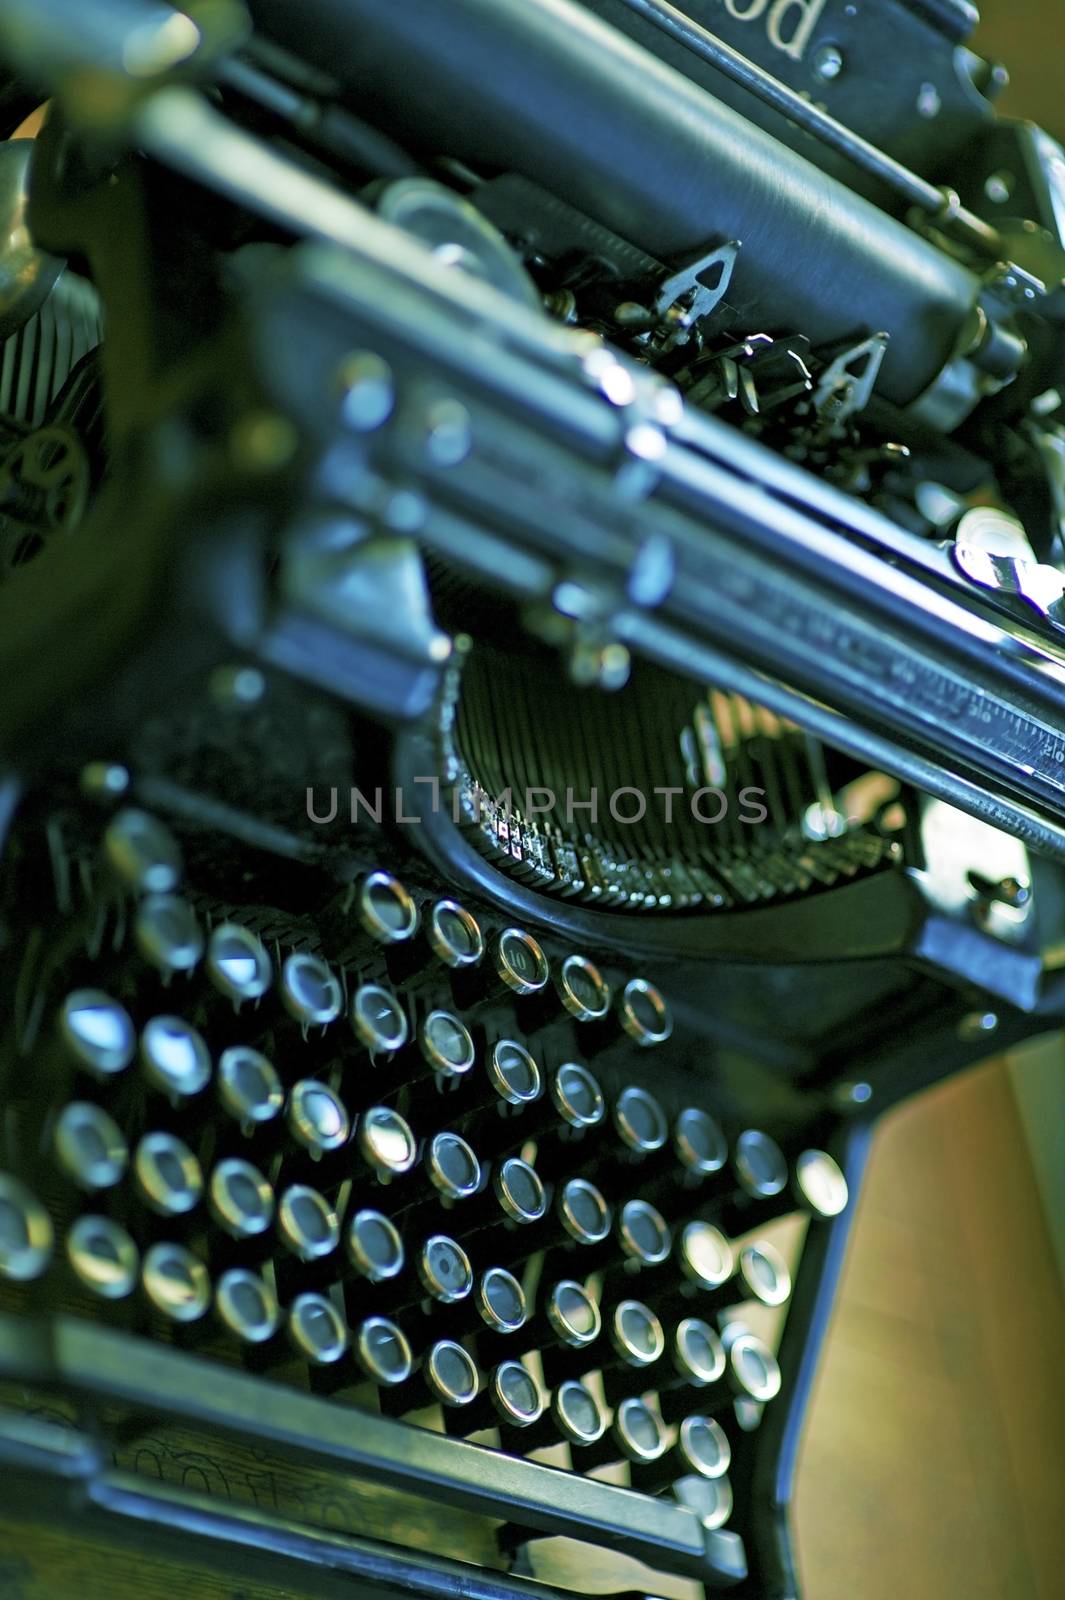 Old Typewriter Machine by welcomia